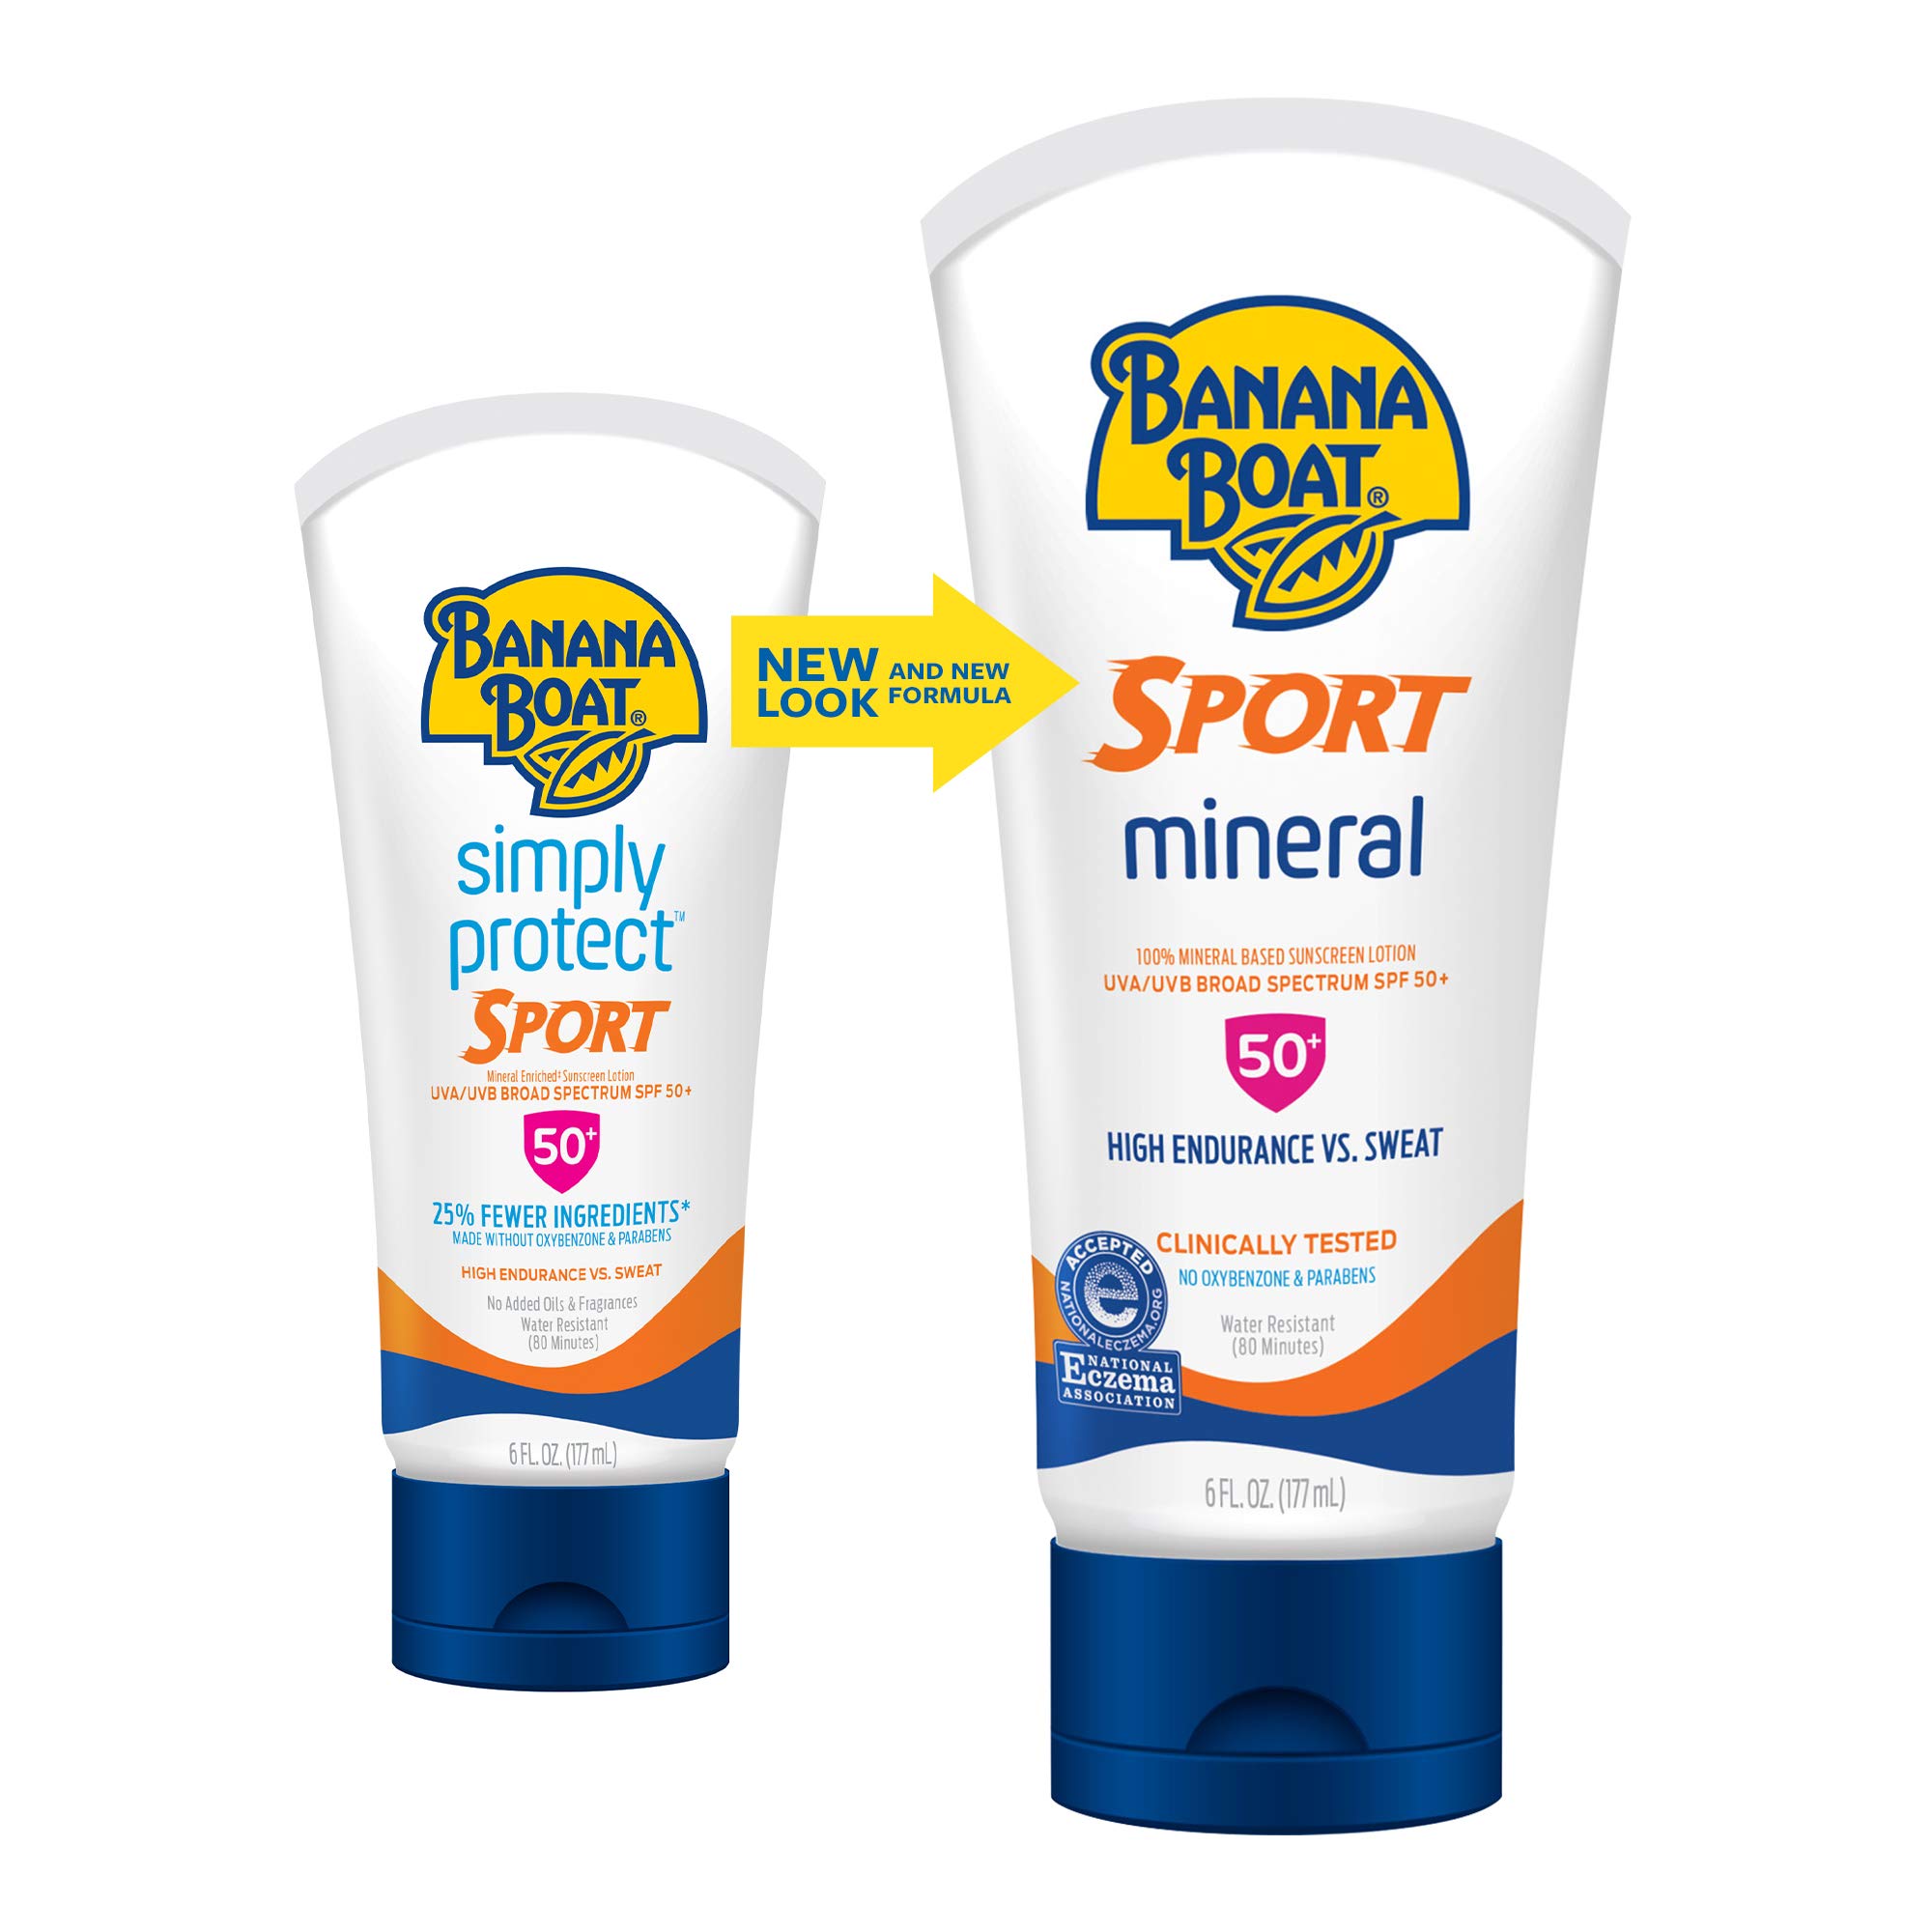 Banana Boat Sport 100% Mineral Sunscreen Lotion, Broad Spectrum, SPF 50+, 6 Fl Oz (Pack of 1)